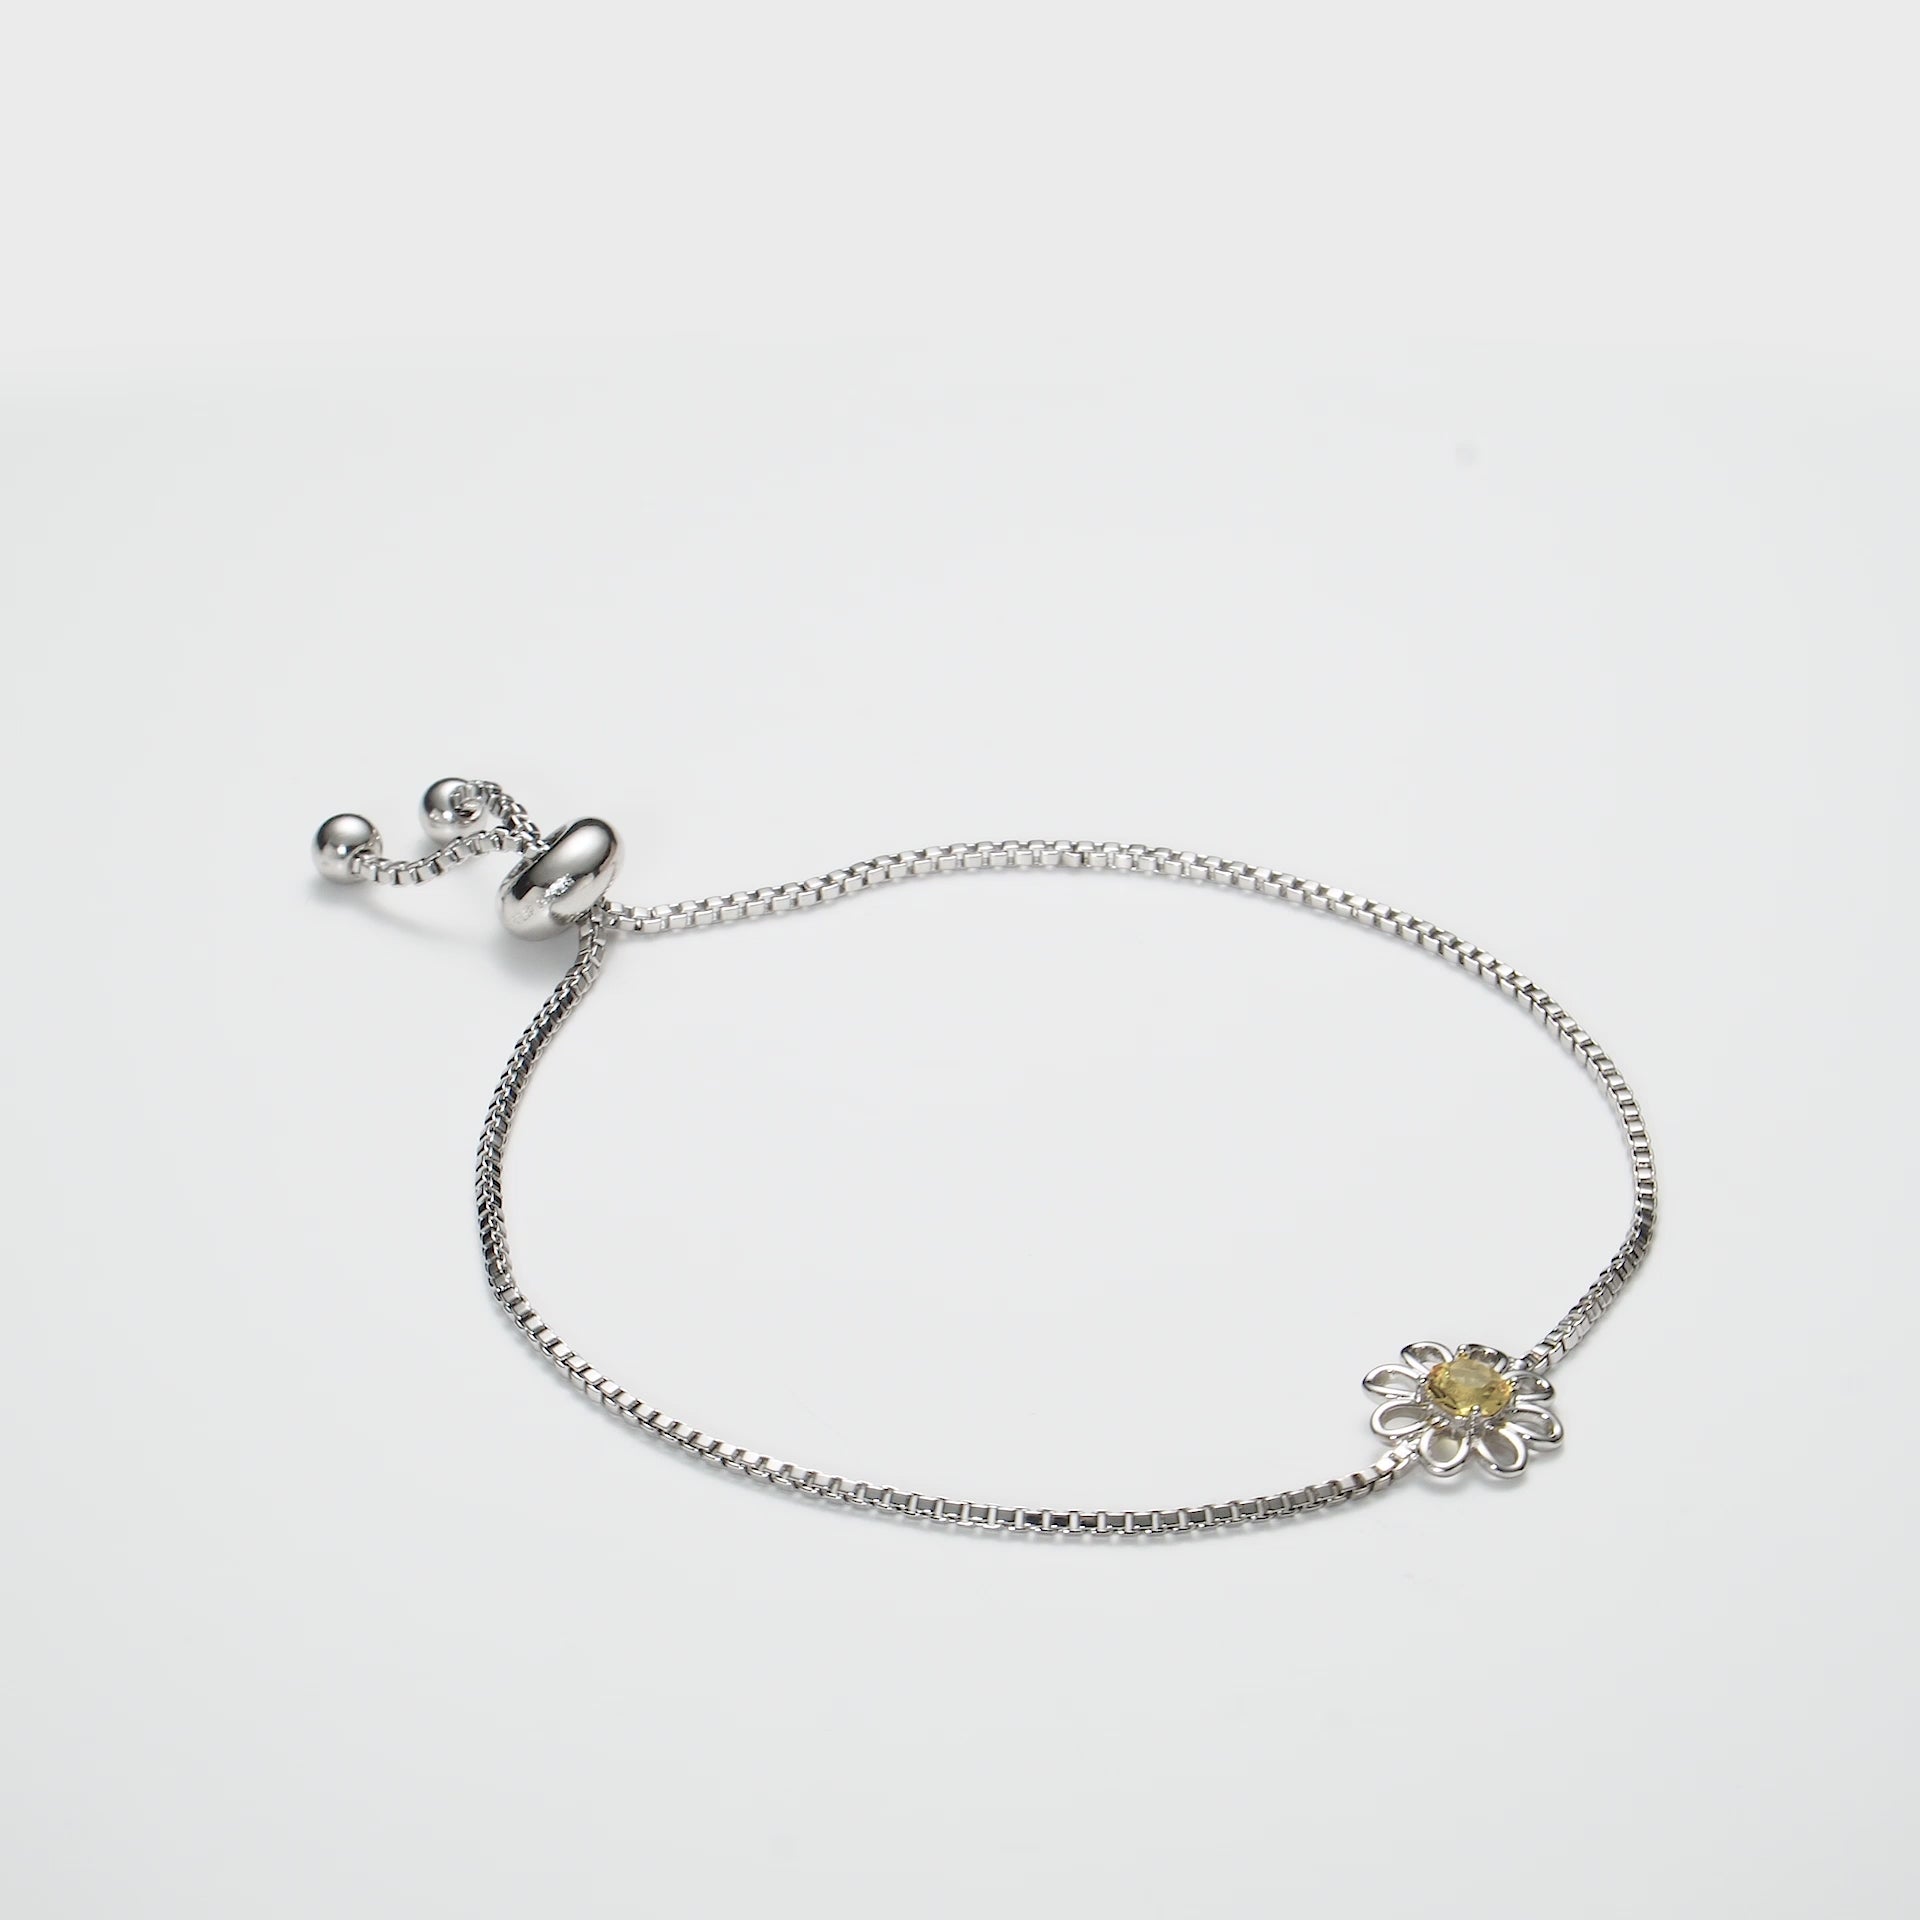 Daisy Crystal Friendship Bracelet Created with Zircondia® Crystals Video